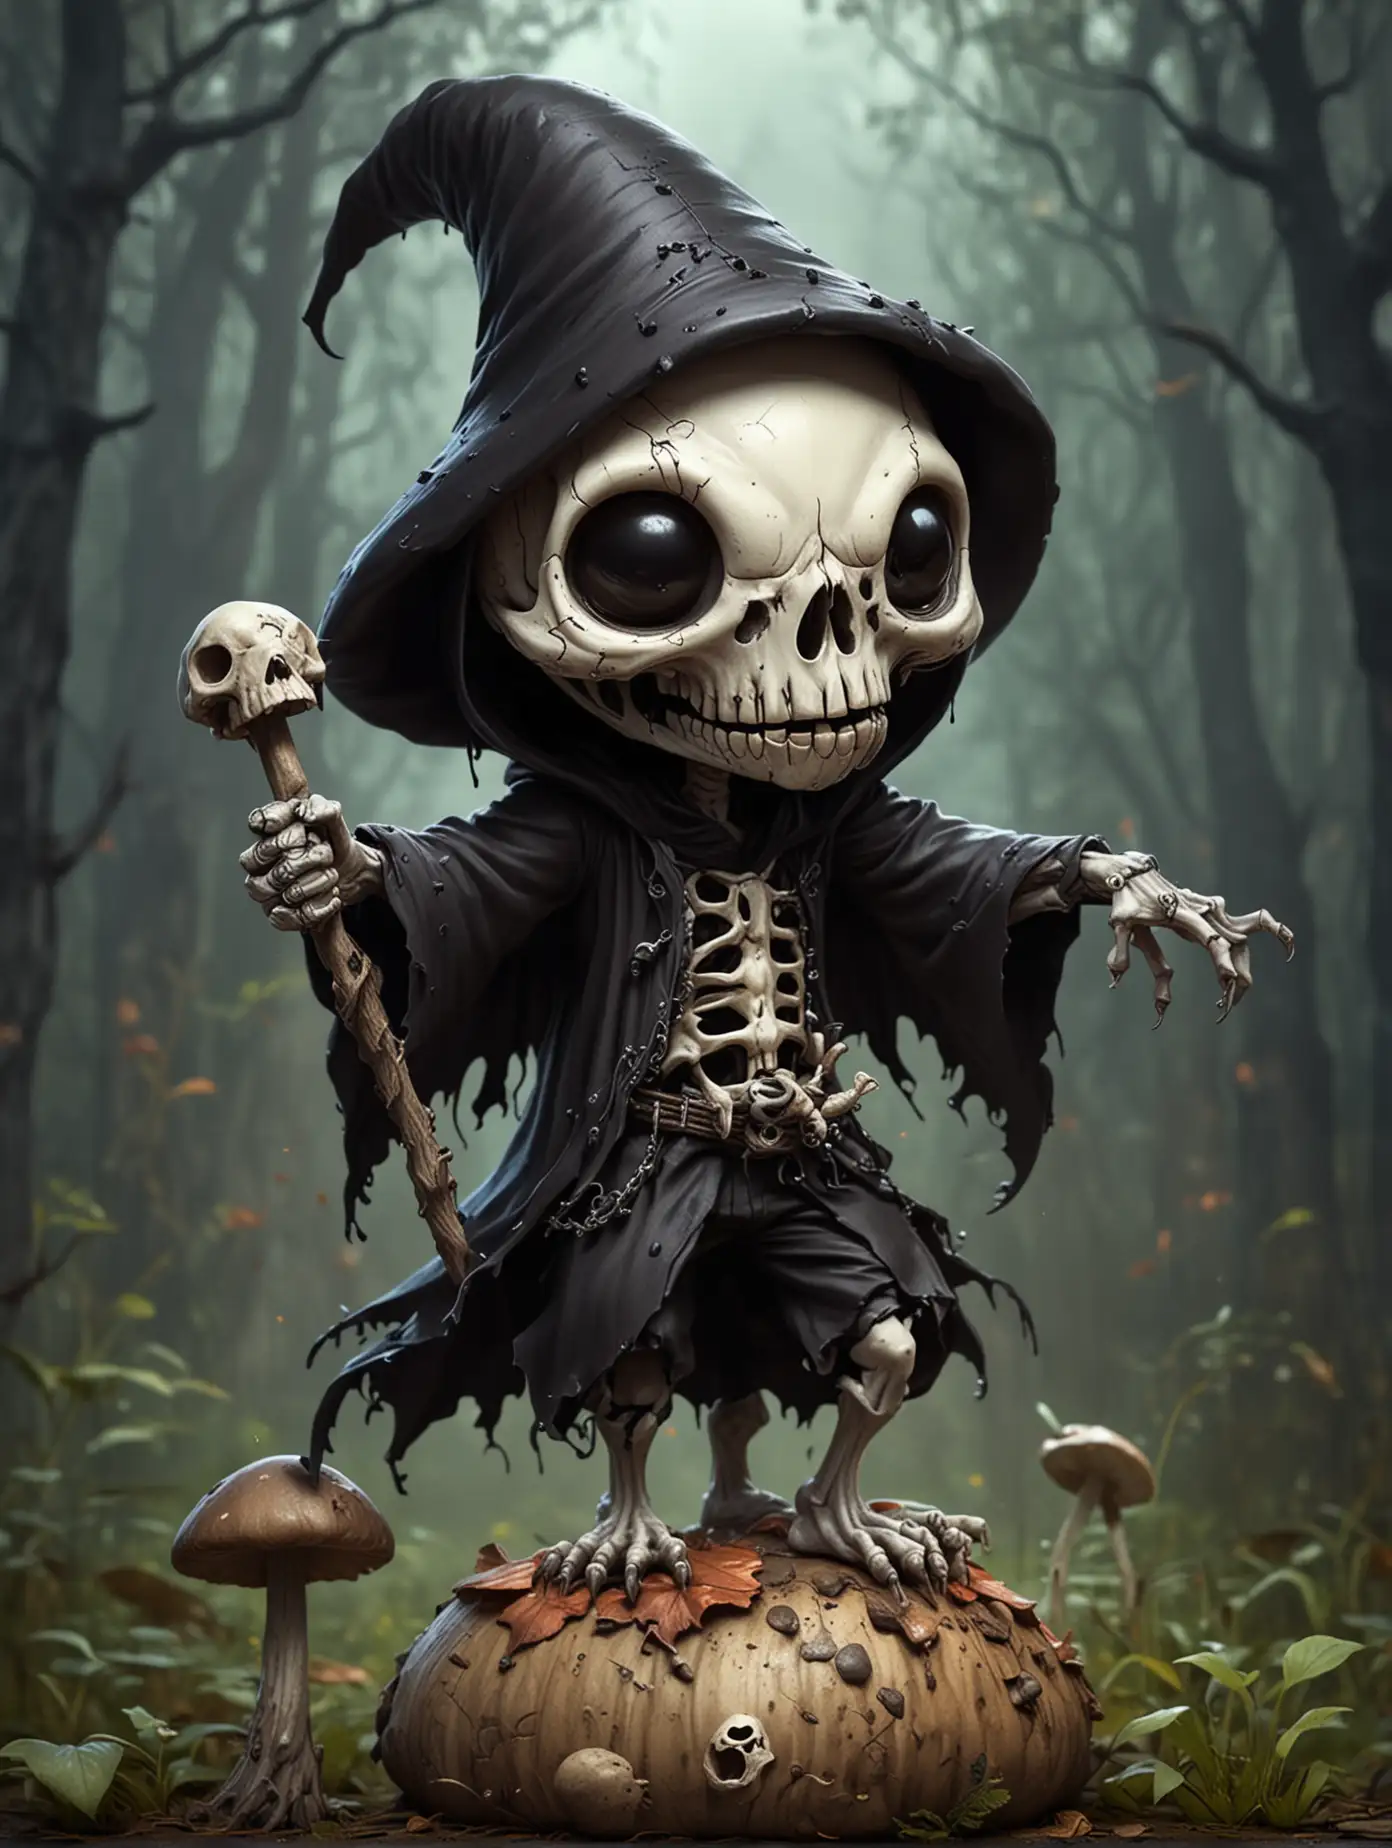 Chibi Style Grim Reaper with Rat Skull Dancing on Mushroom